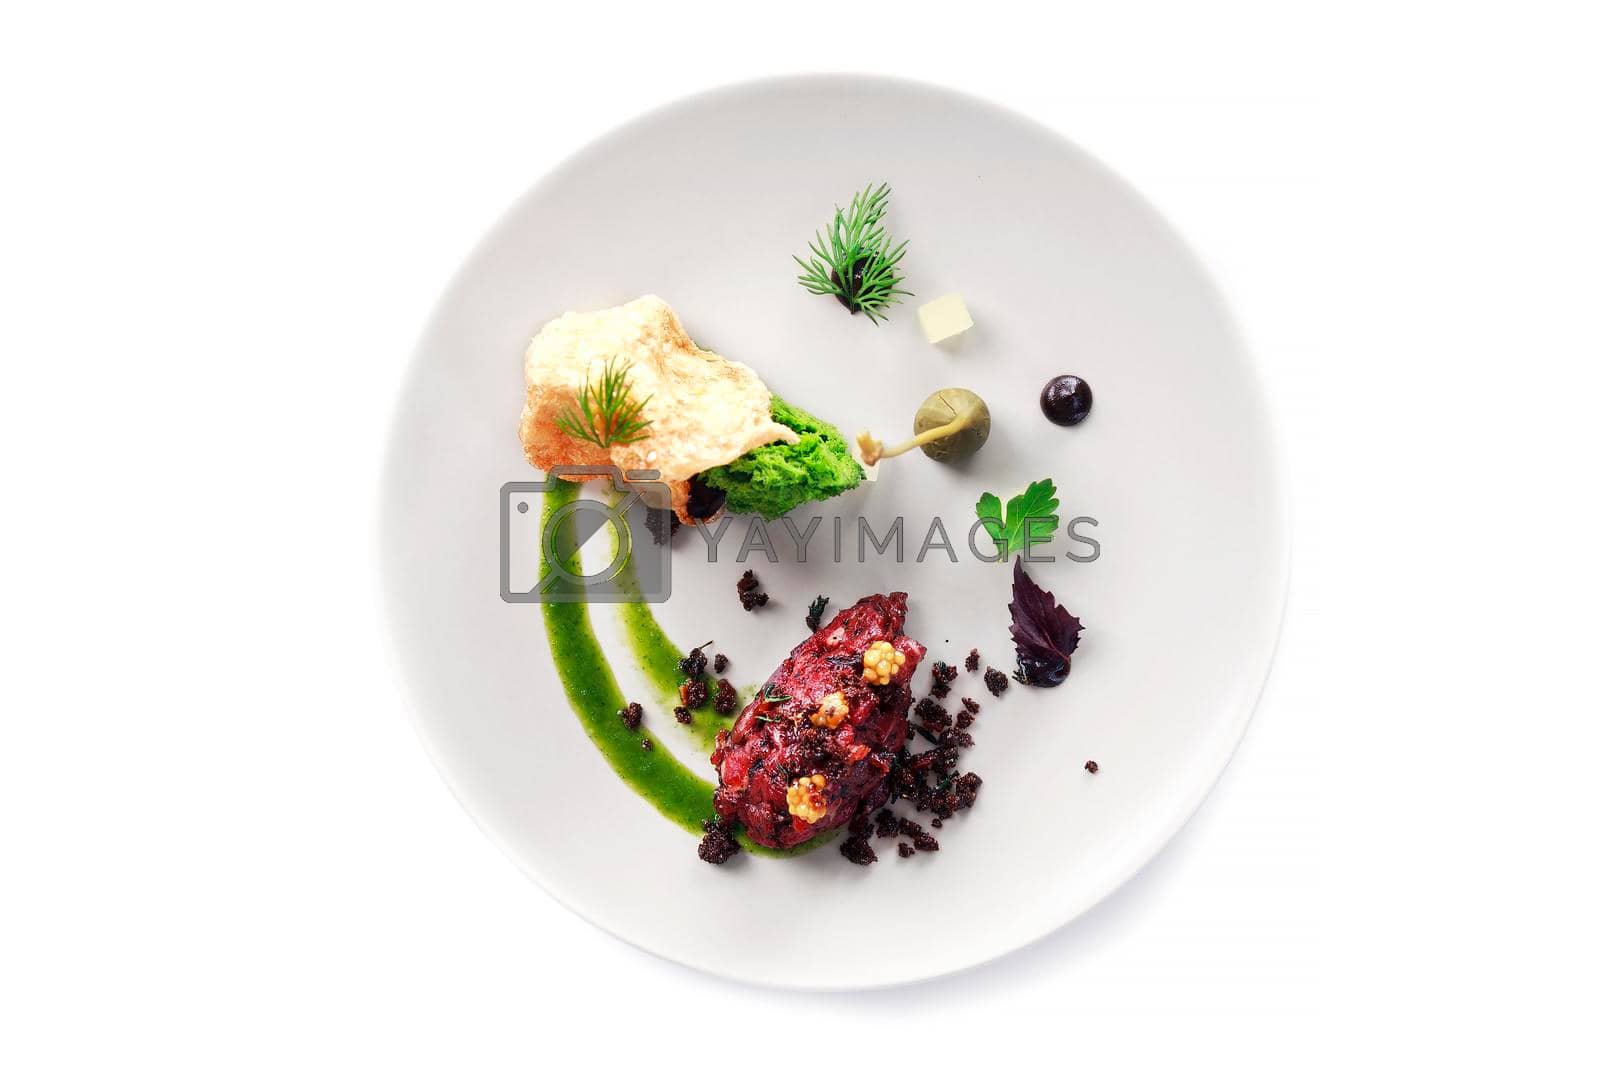 Royalty free image of Modern Molecular cuisine. by Jyliana